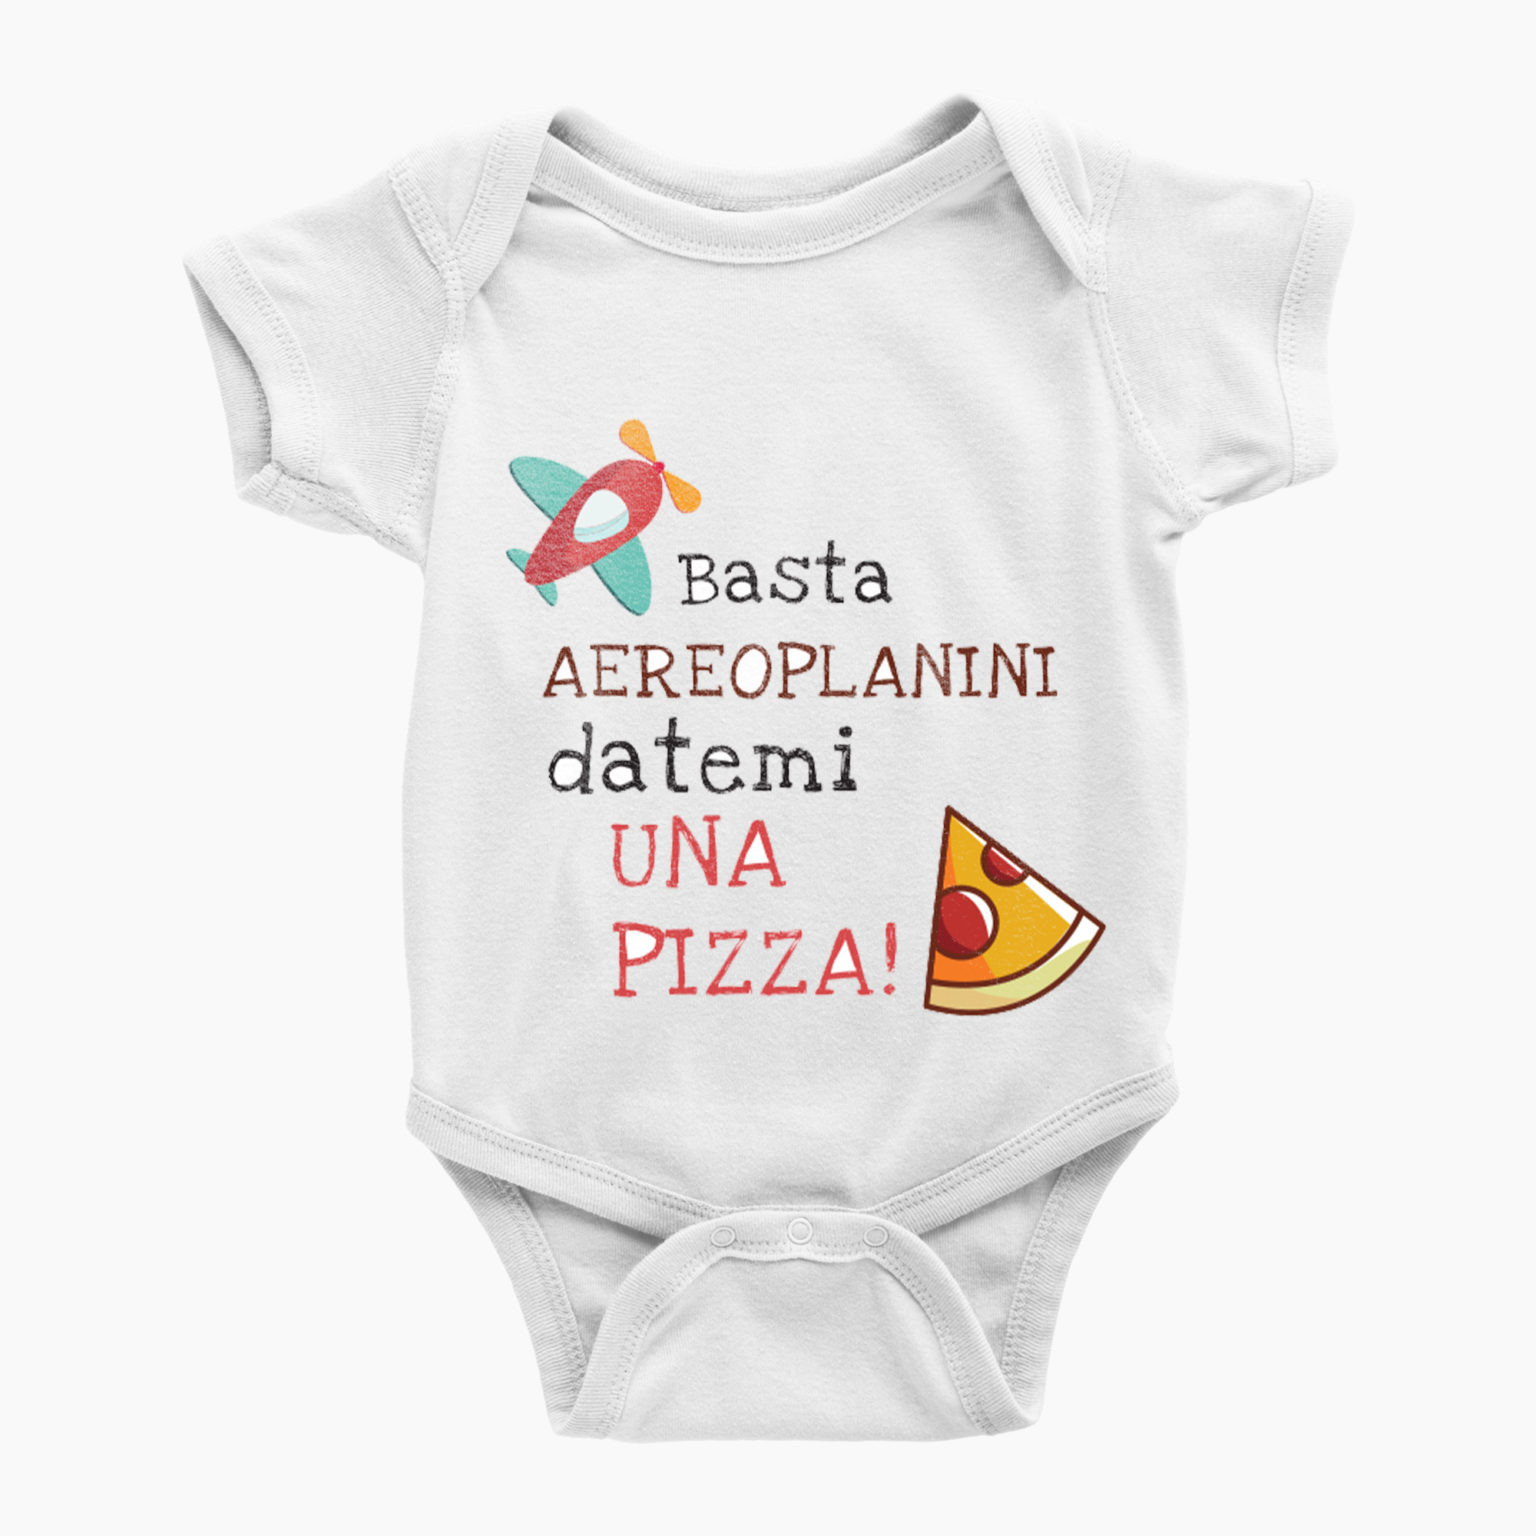 Body Basta Aeroplanini “datemi una pizza”